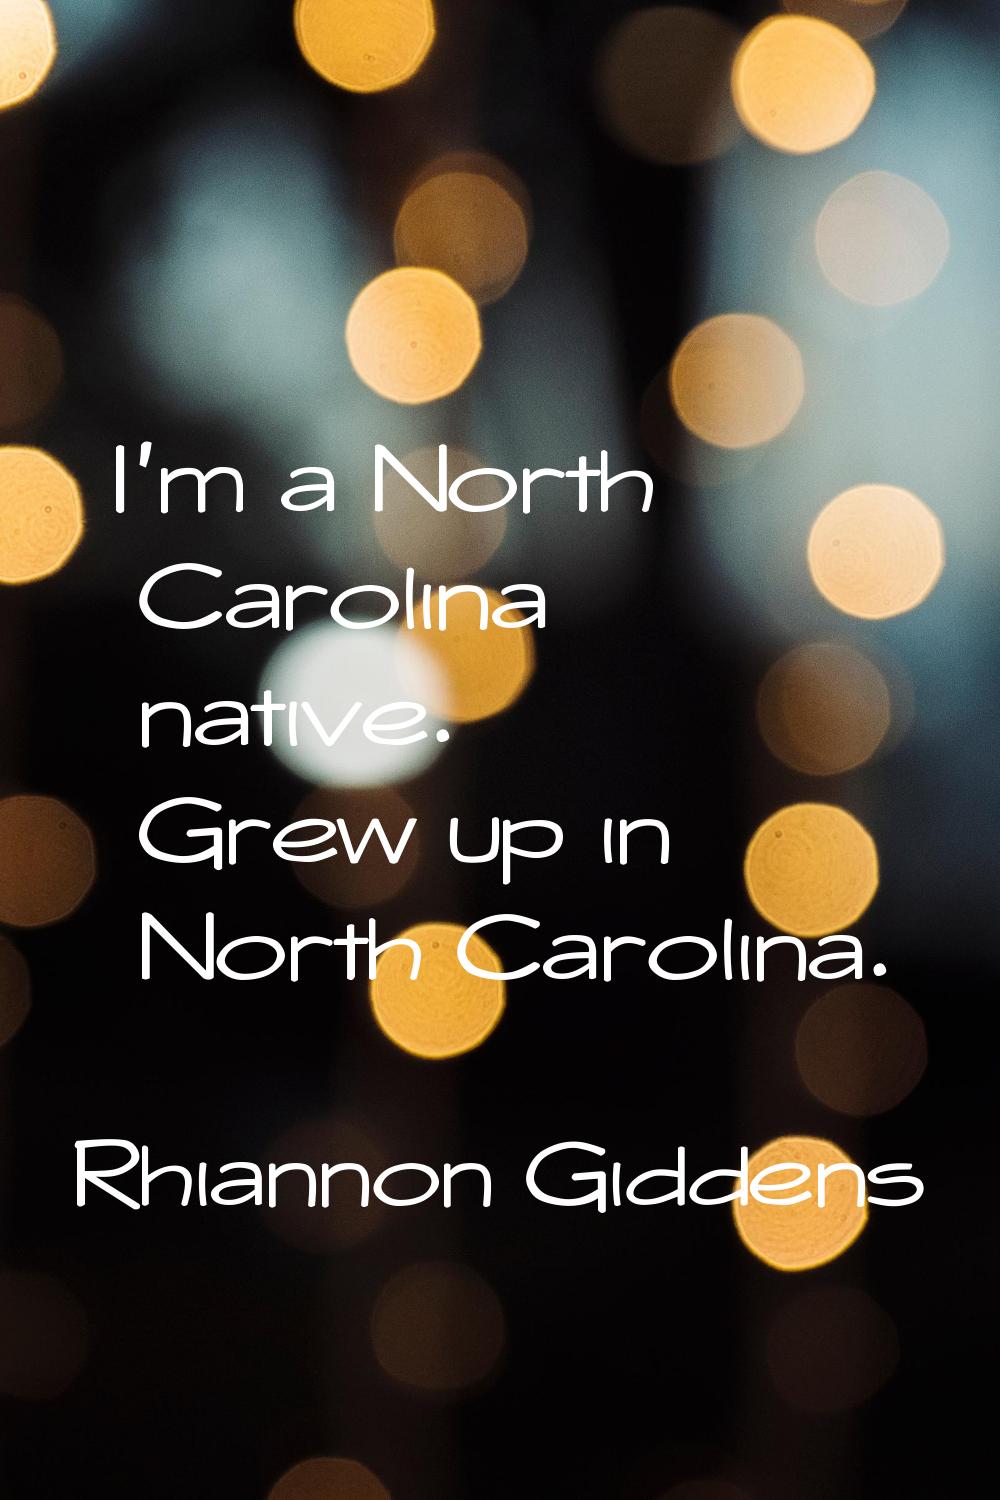 I'm a North Carolina native. Grew up in North Carolina.